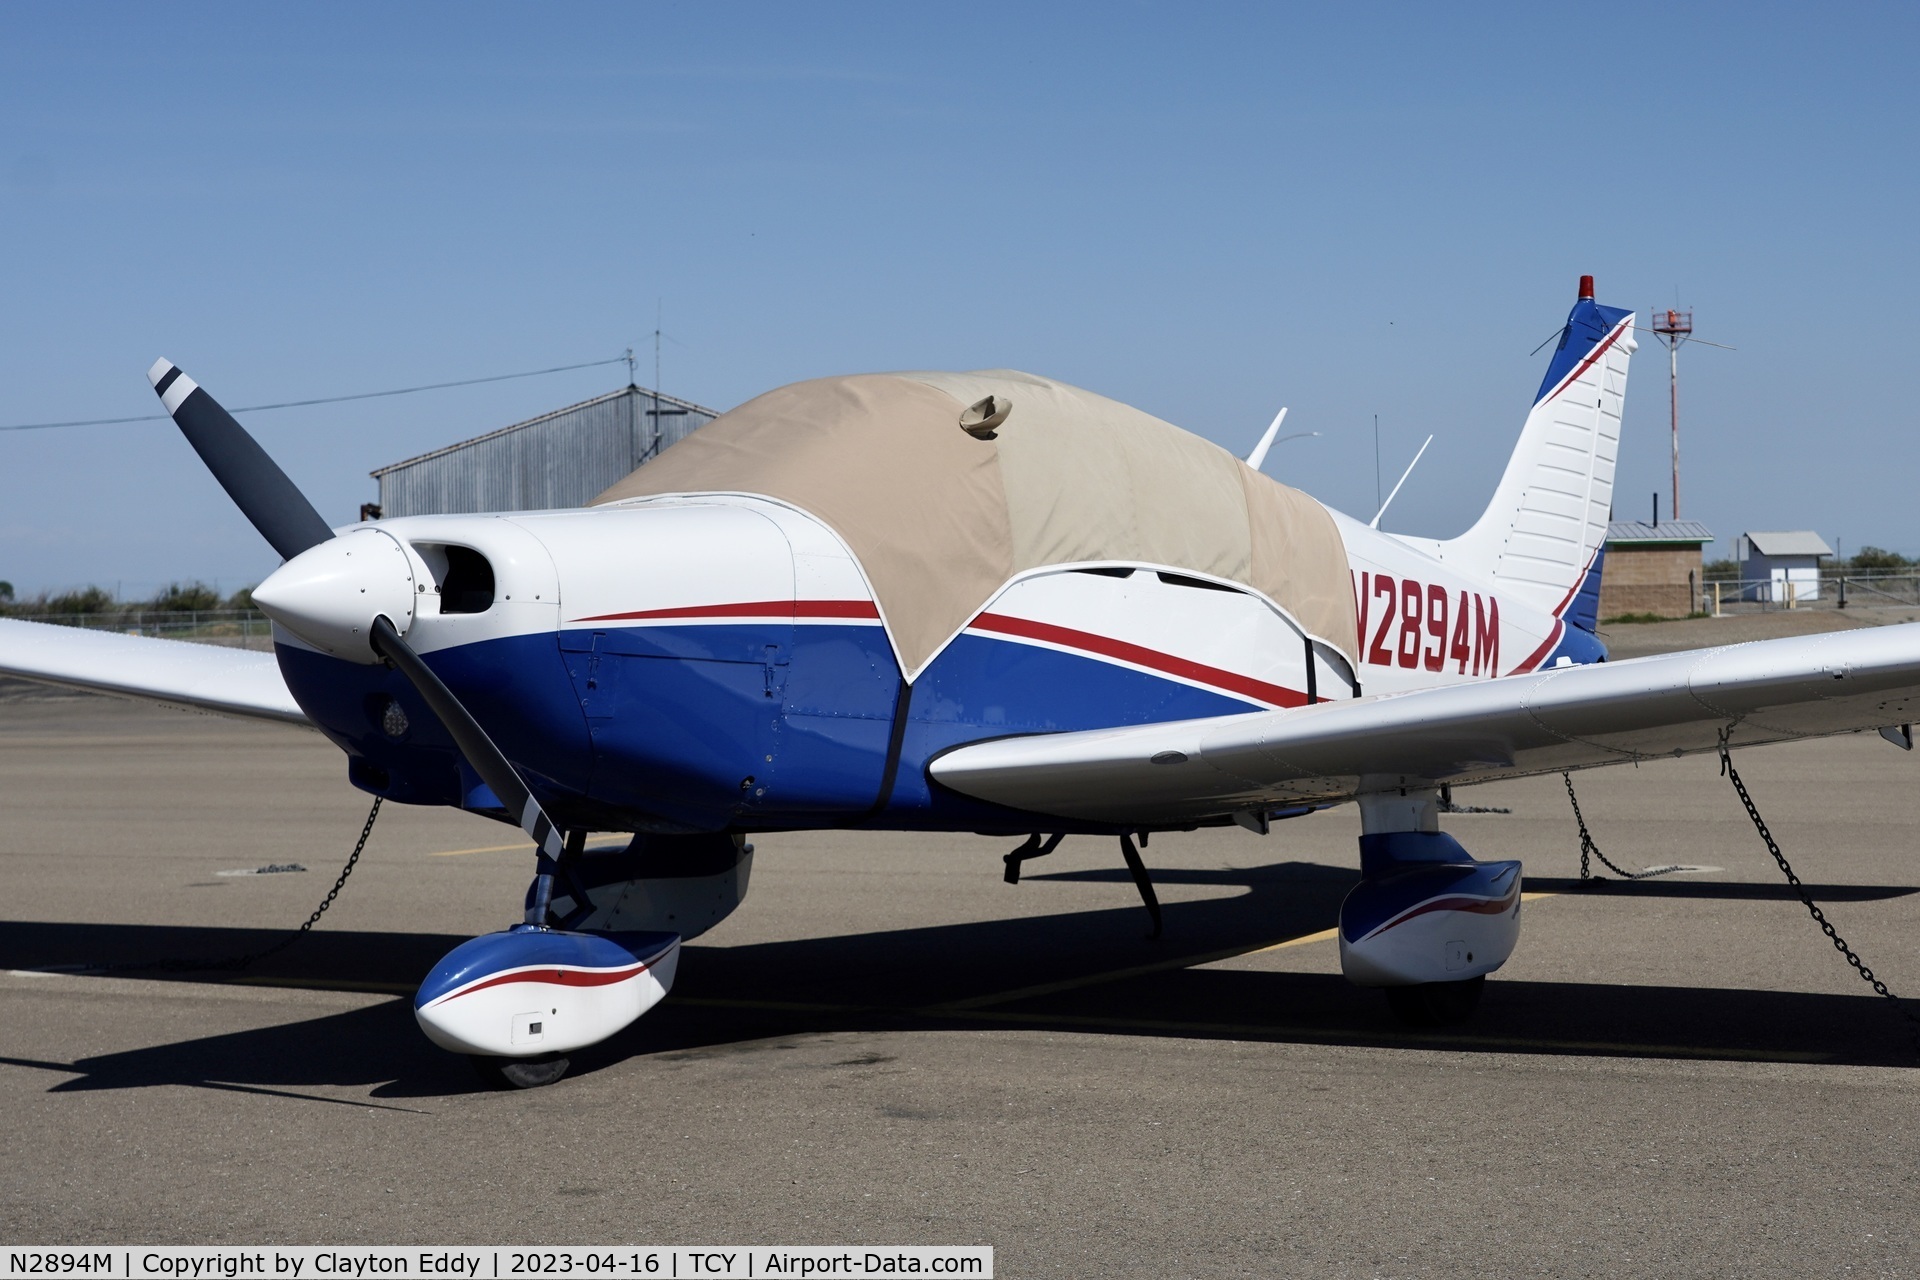 N2894M, 1977 Piper PA-28-161 C/N 28-7816322, Tracy airport in California 2023.